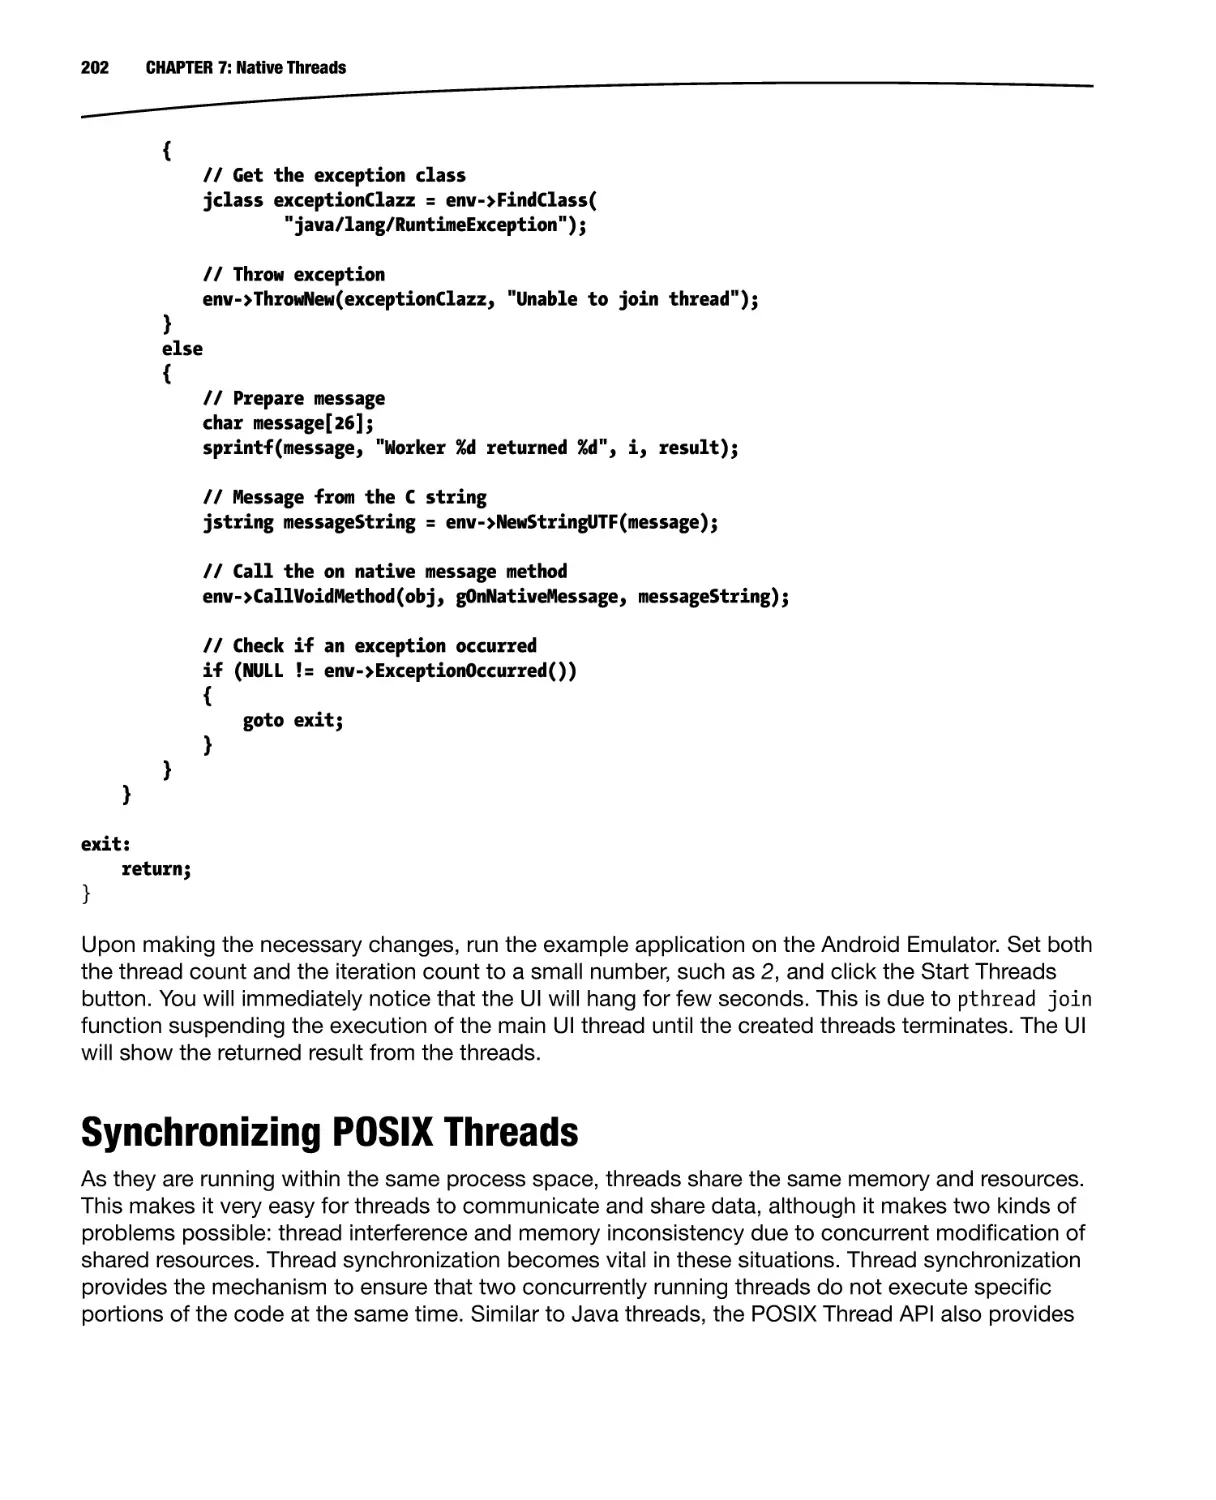 Synchronizing POSIX Threads